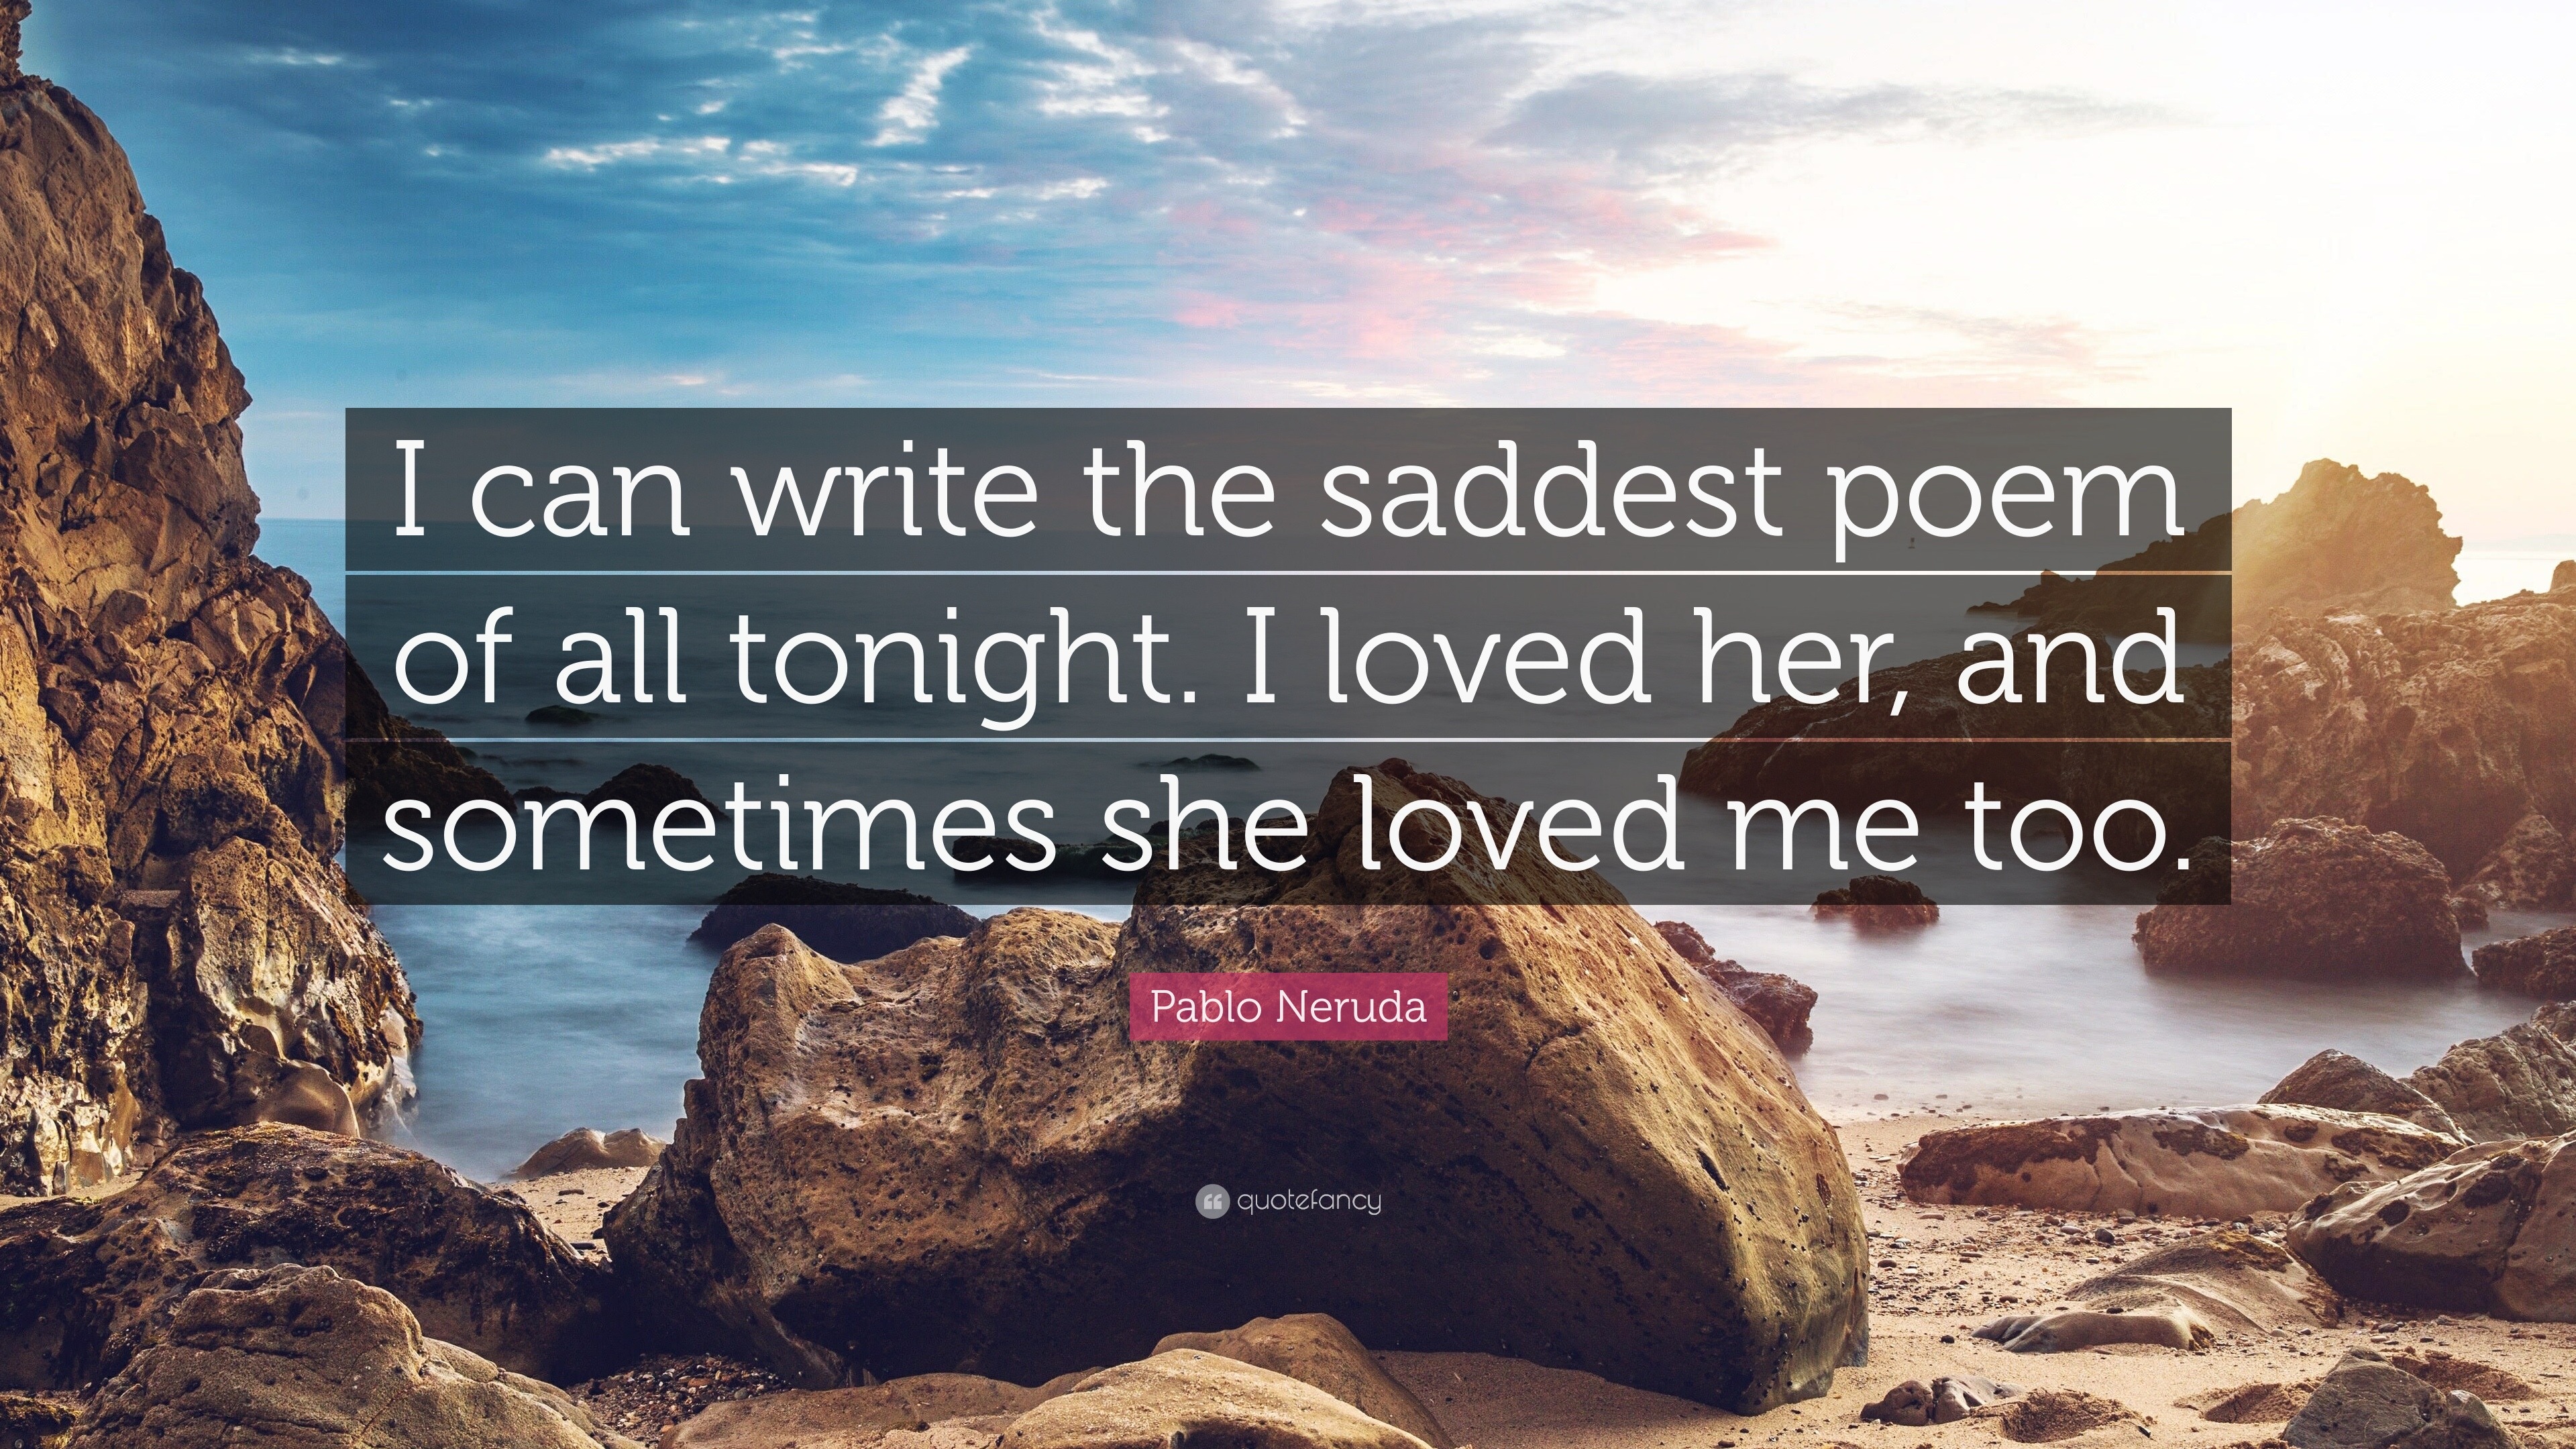 Pablo Neruda Quote: “I can write the saddest poem of all tonight. I